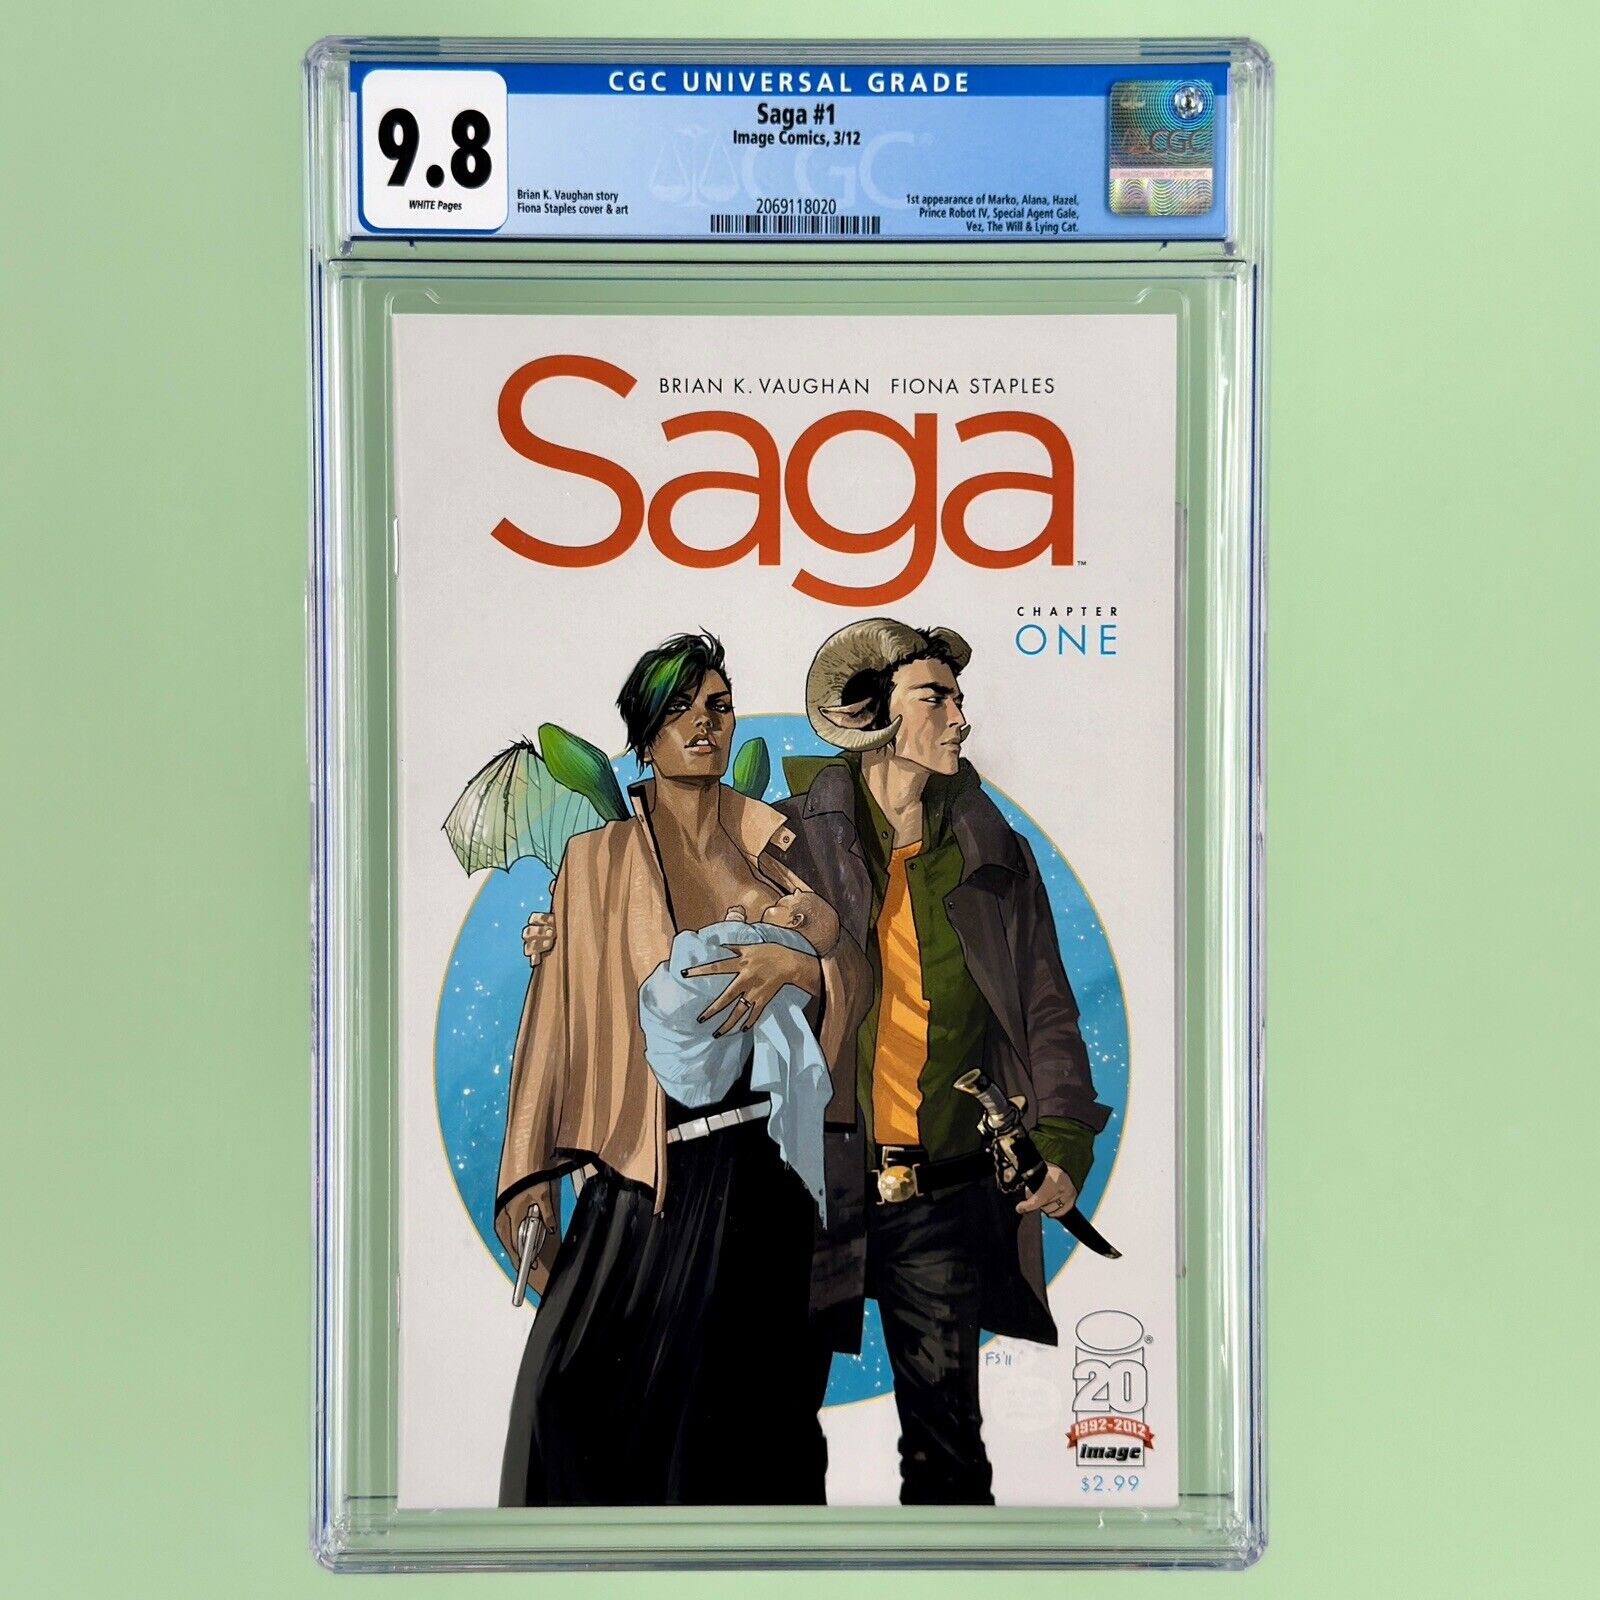 Saga #1 (CGC 9.8) Image Comics 2012, 1st Print, Brian K. Vaughan, Fiona Staples